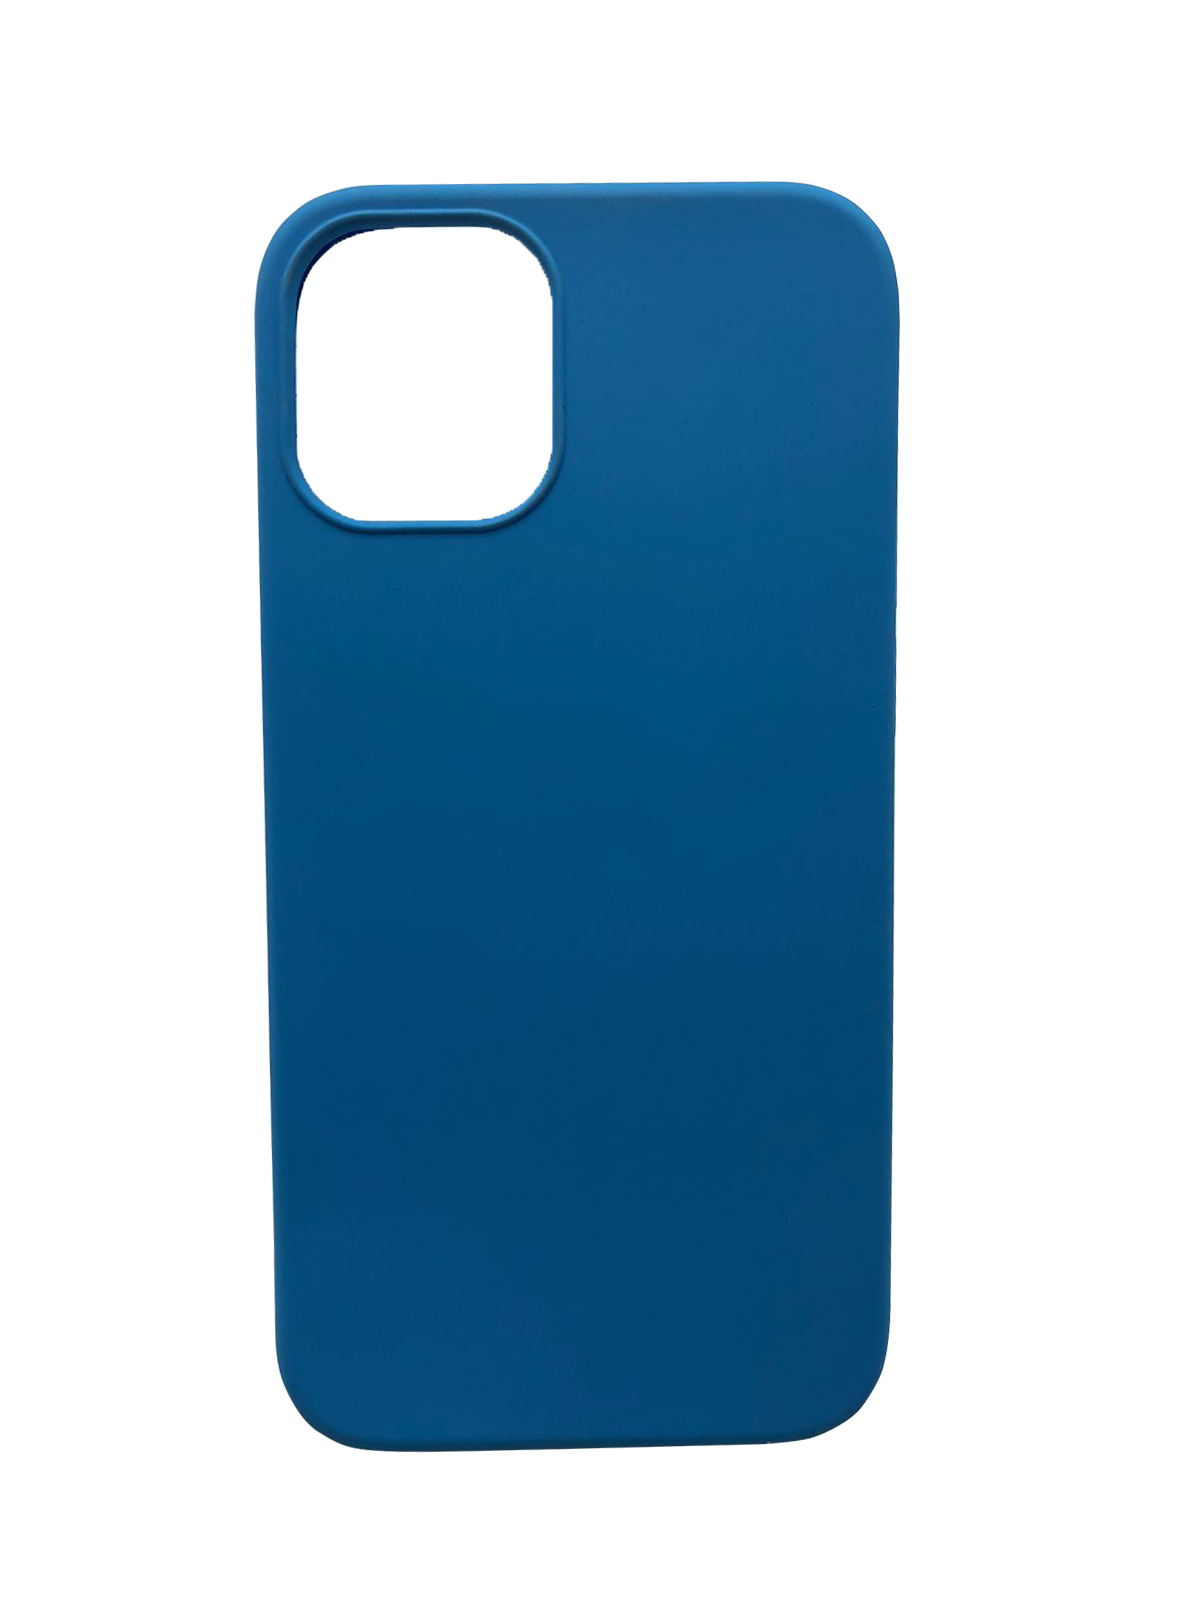 Silicone Case iPHONE 12 MINI BLUE